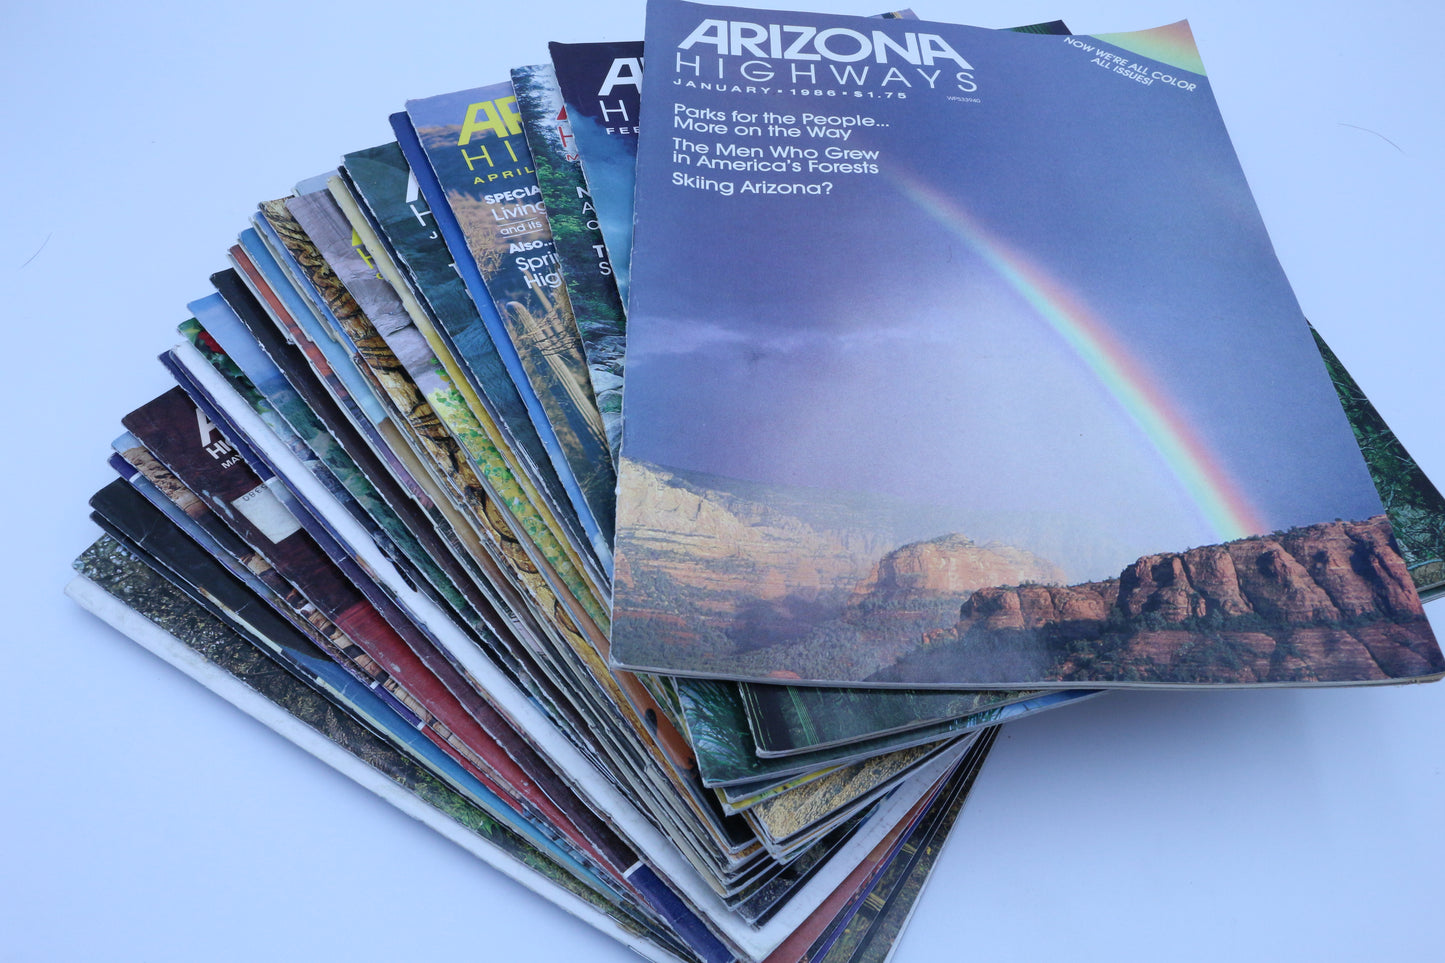 One Vintage Arizona Magazine, Junk Journal Supplies, Retro pictures of popular AZ sites, Native American